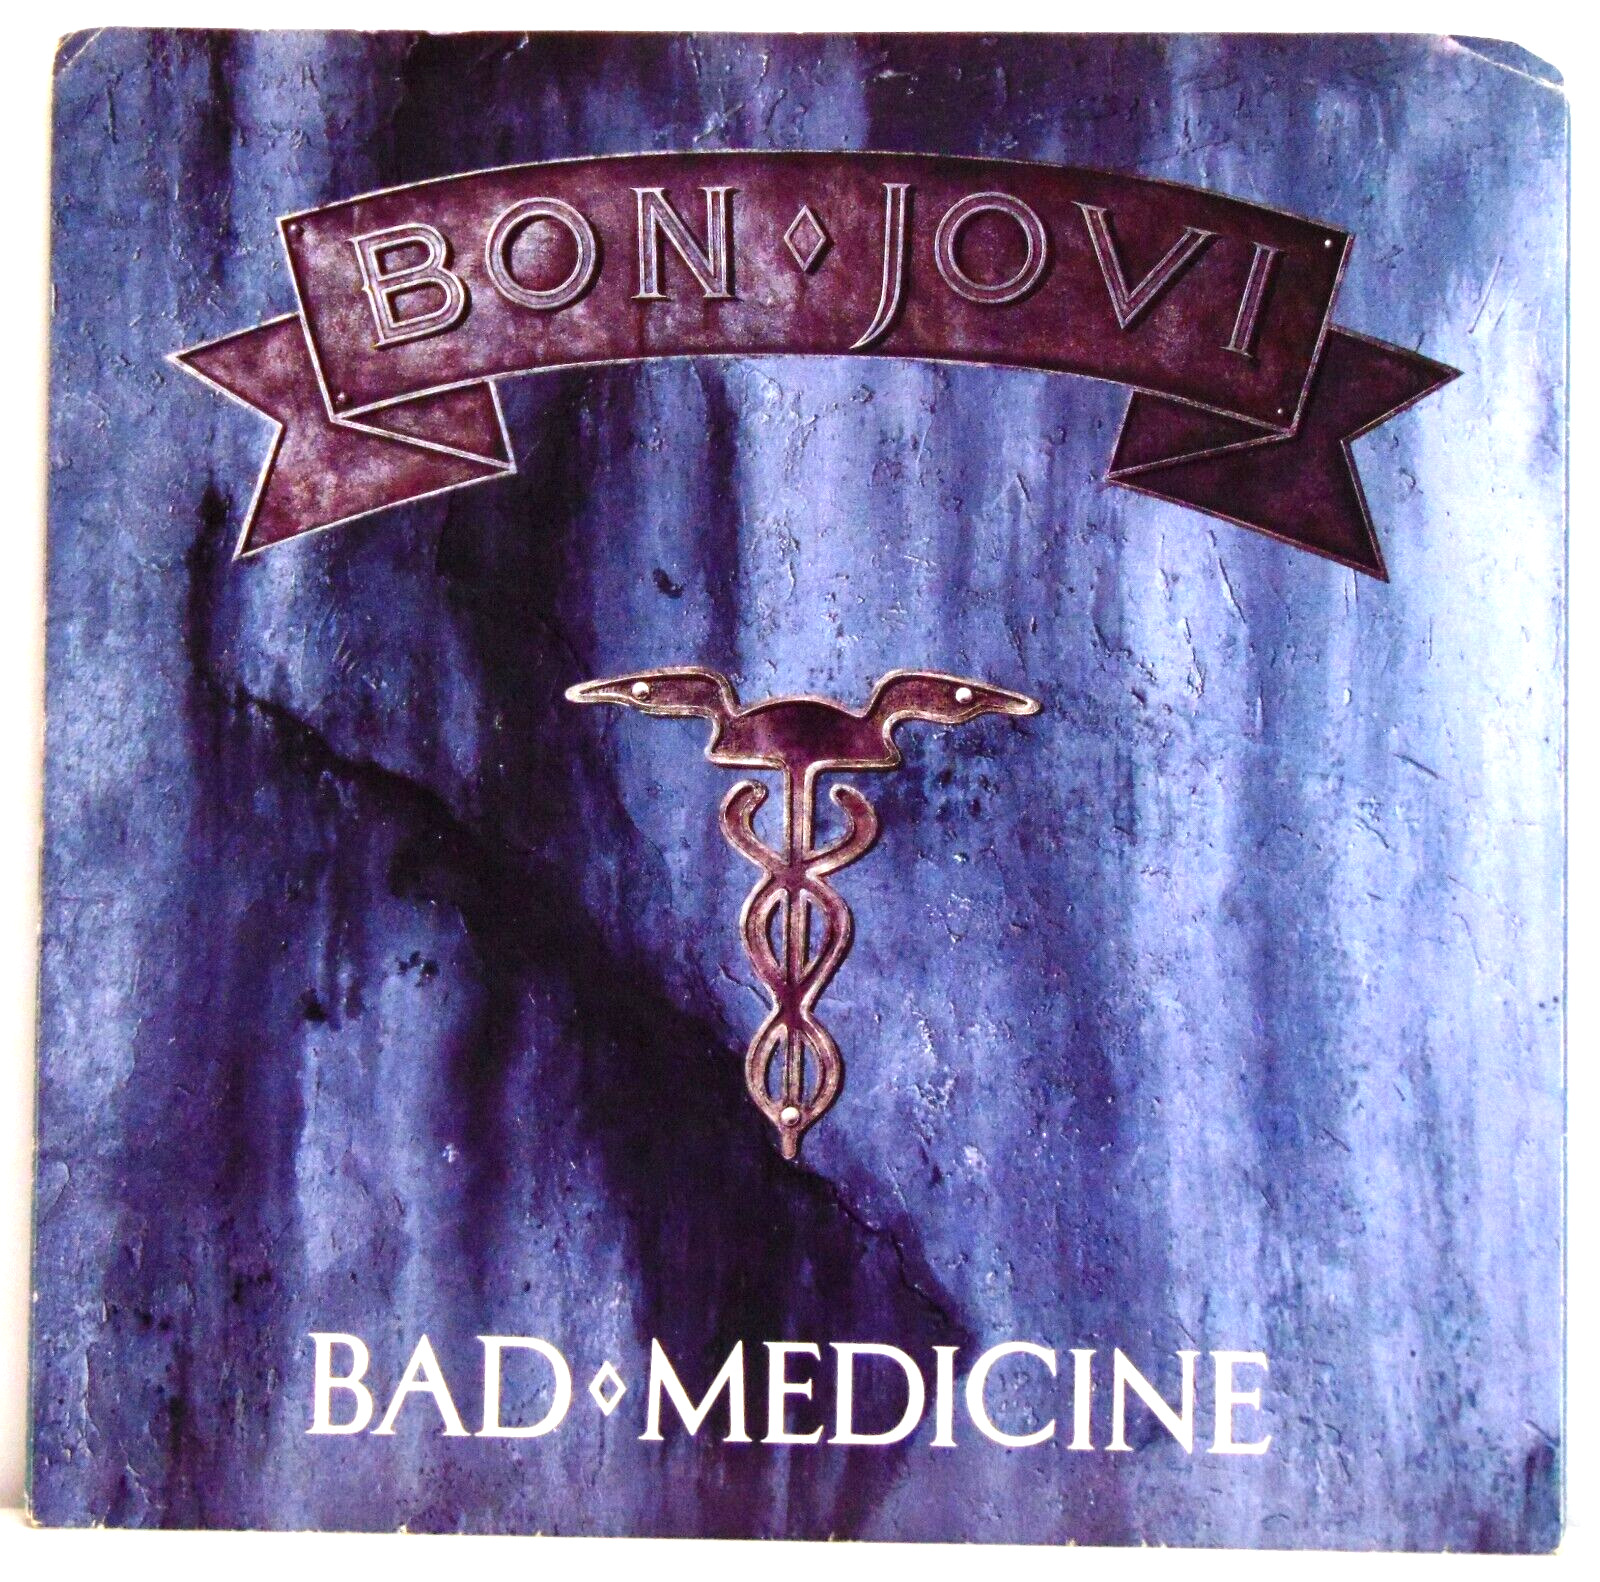 Bon Jovi – Bad Medicine 1988 Mercury  7" 45 Single Record + Pic Sleeve NM/VG+